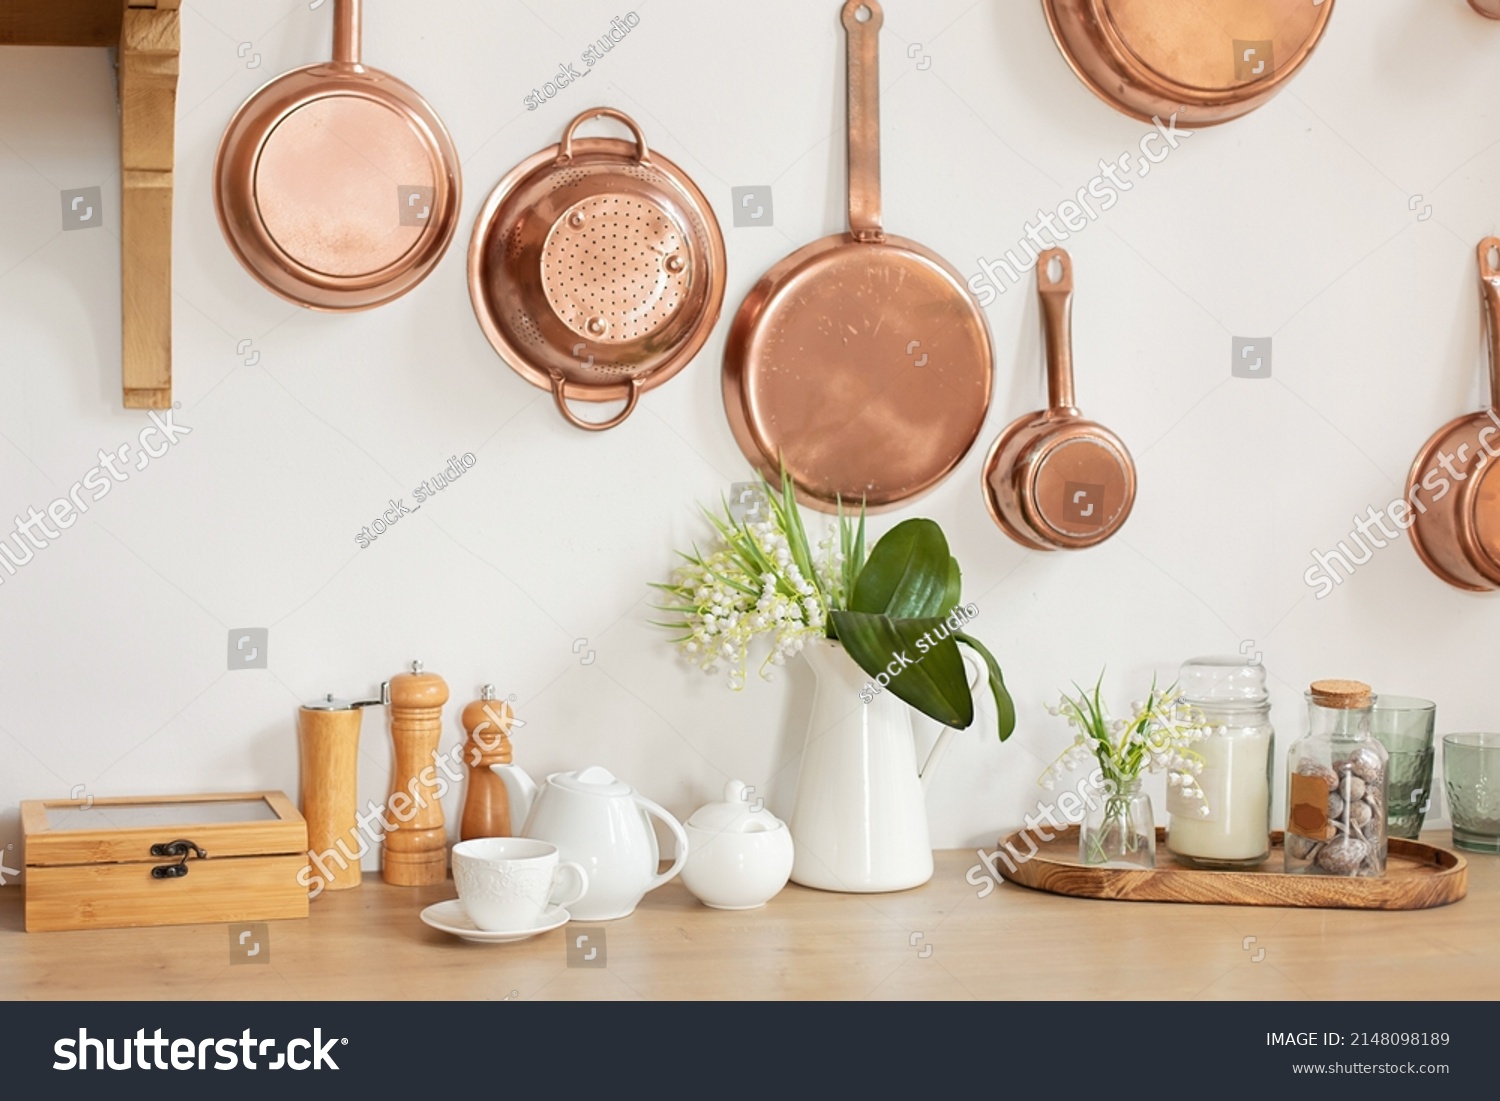 20,20 Copper Pot Images, Stock Photos & Vectors   Shutterstock